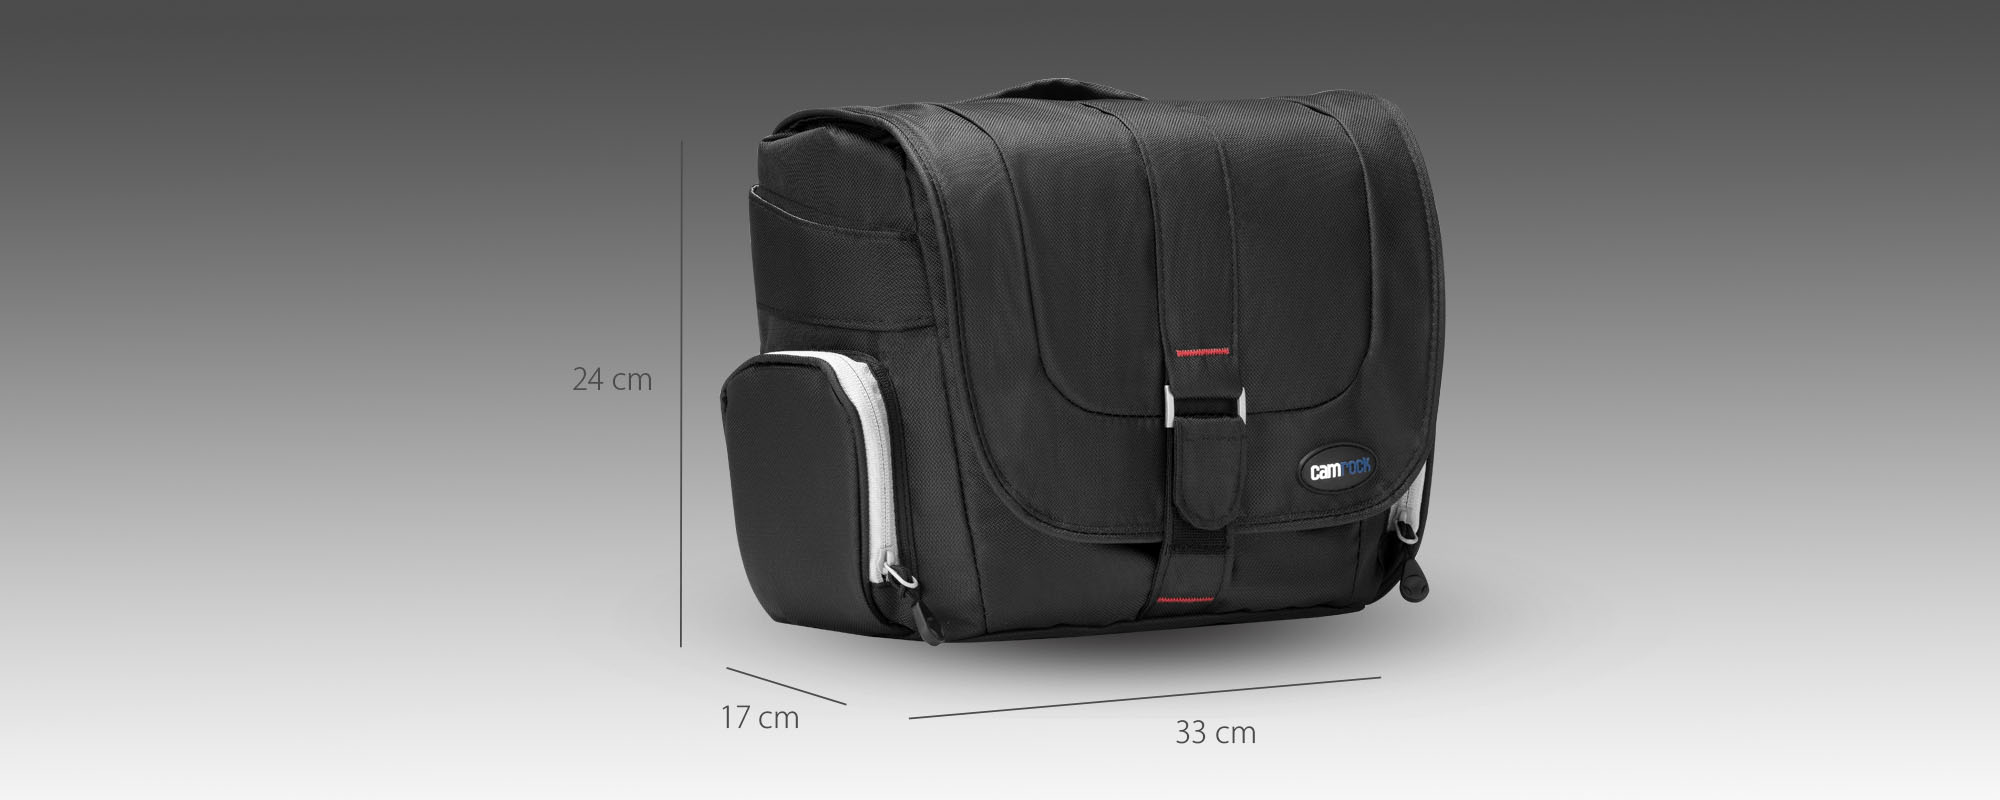 Camrock Pro Travel Mate 100 L Camera Bag - Black